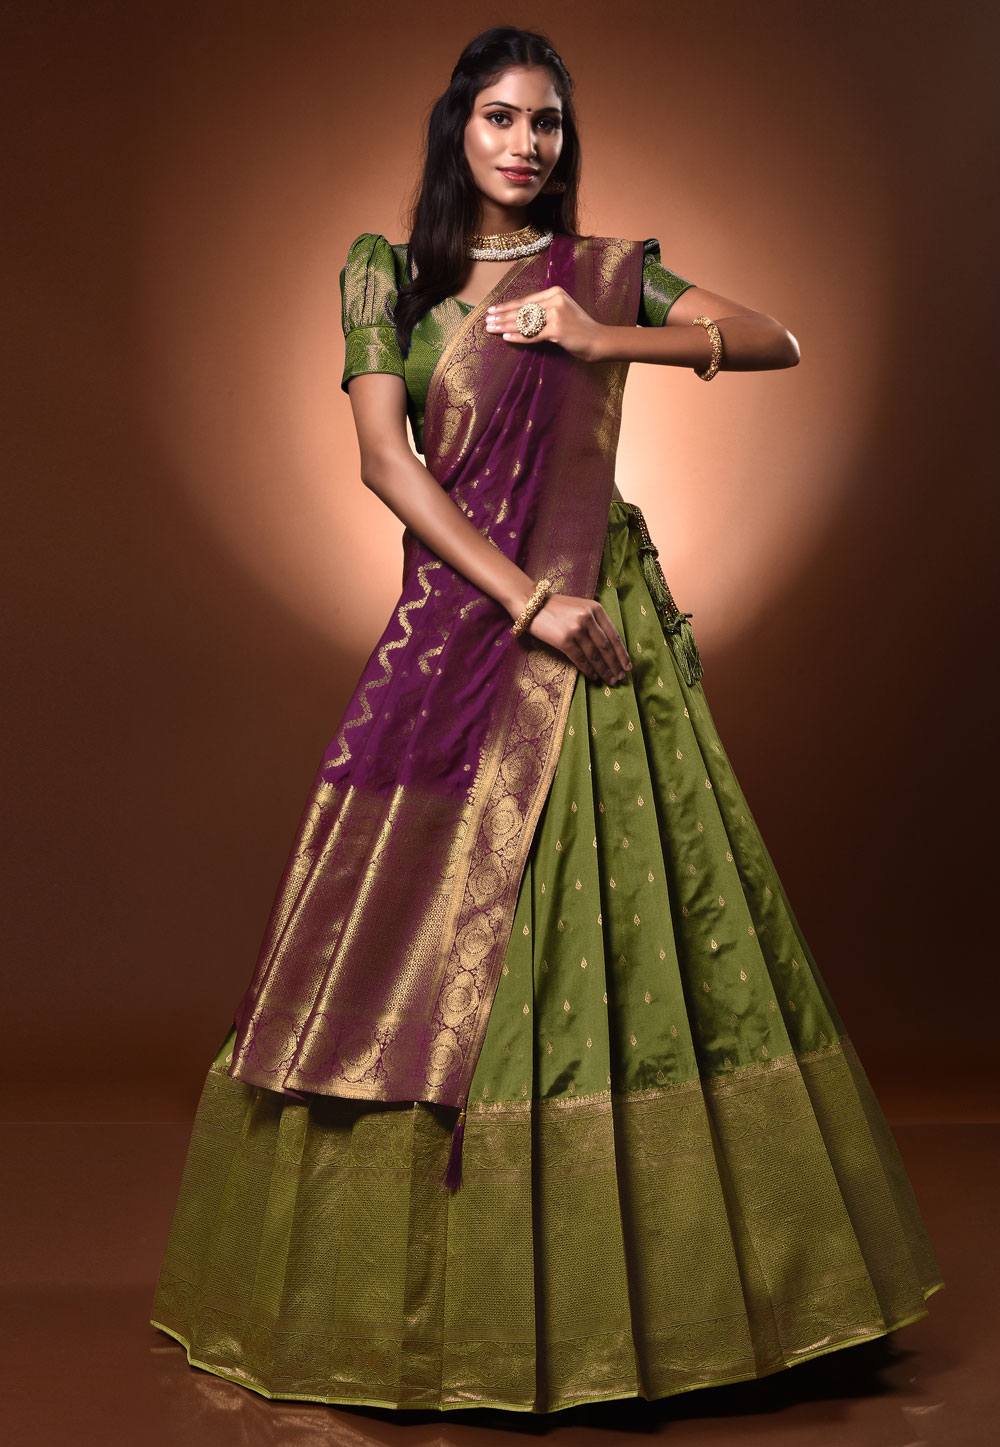 Style guide: Indian Mehndi Outfit Ideas & trending mehndi lehenga styles